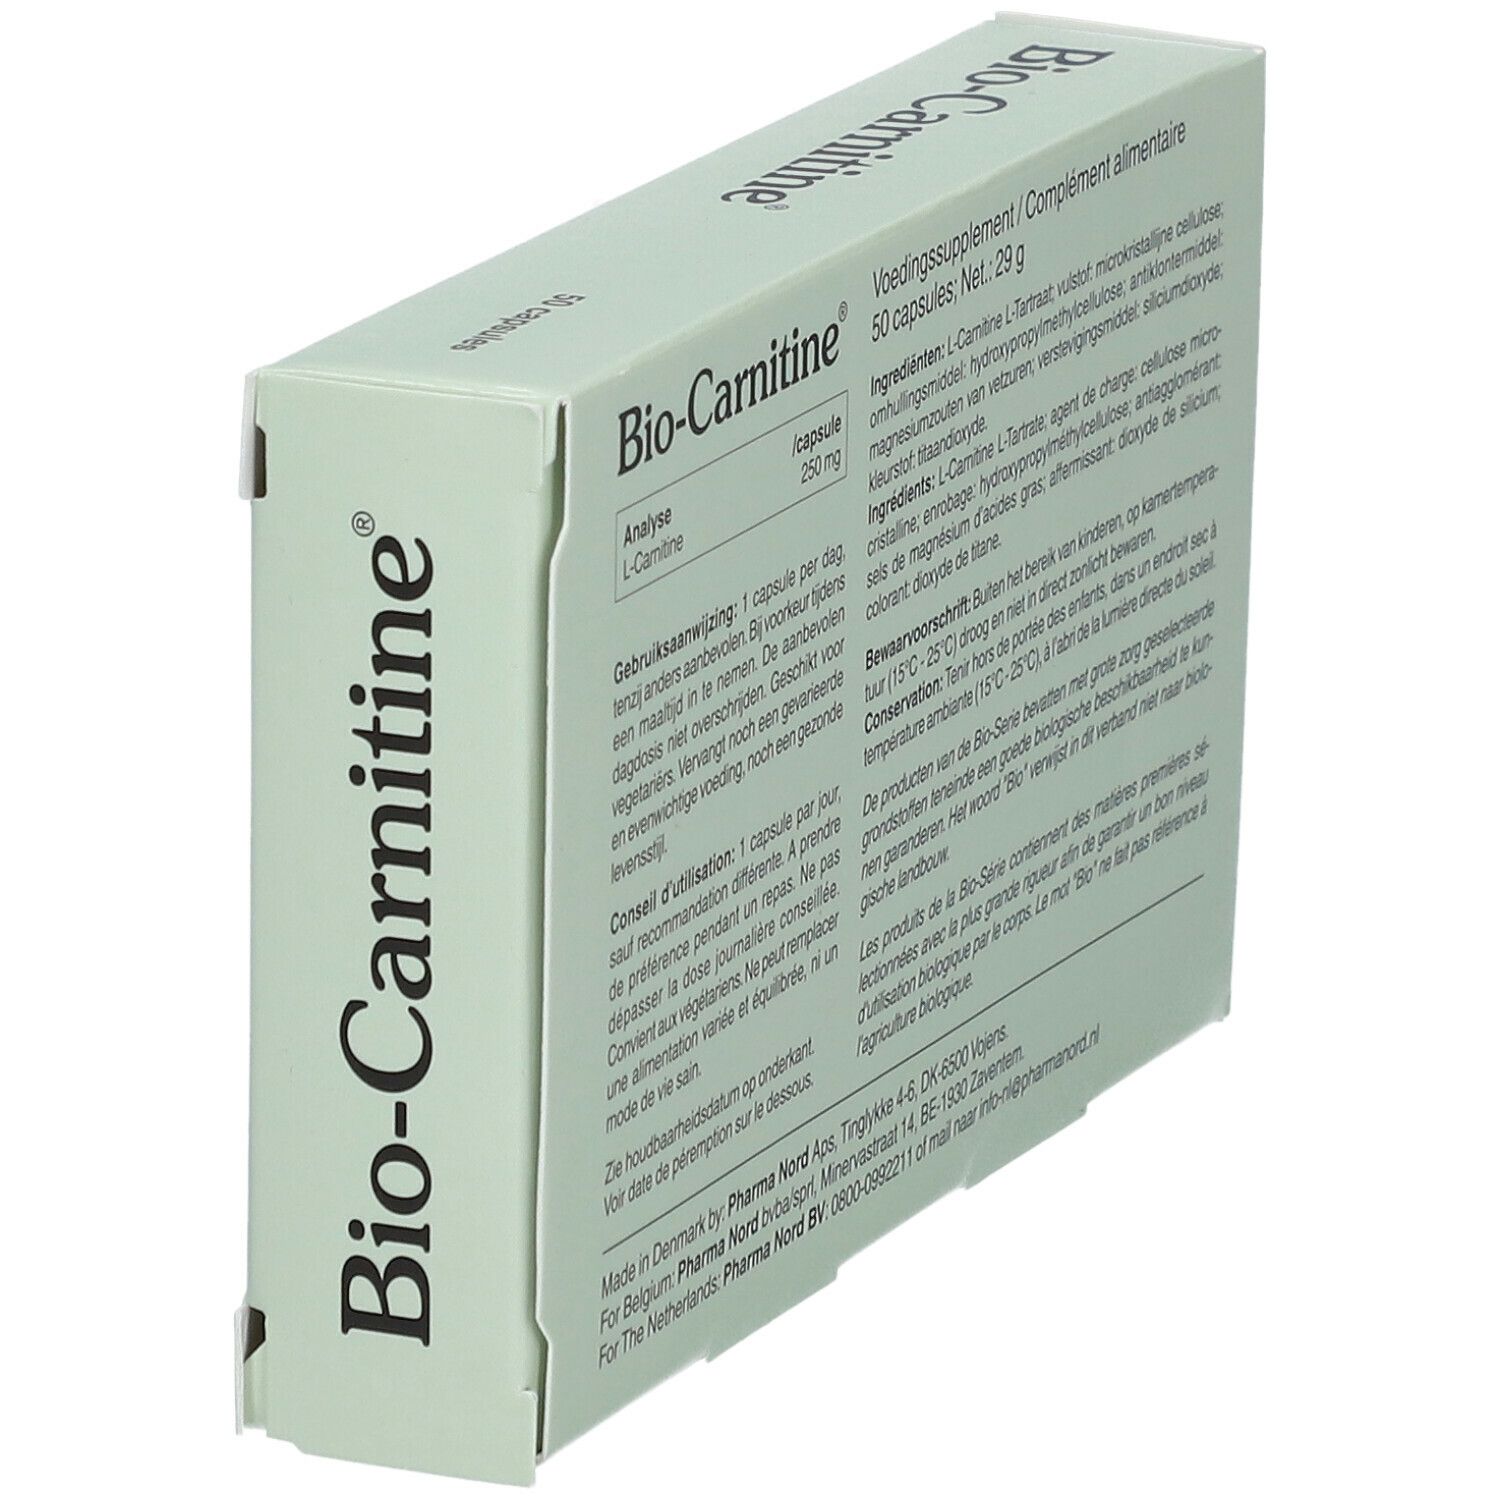 Pharma Nord Bio-Carnitine